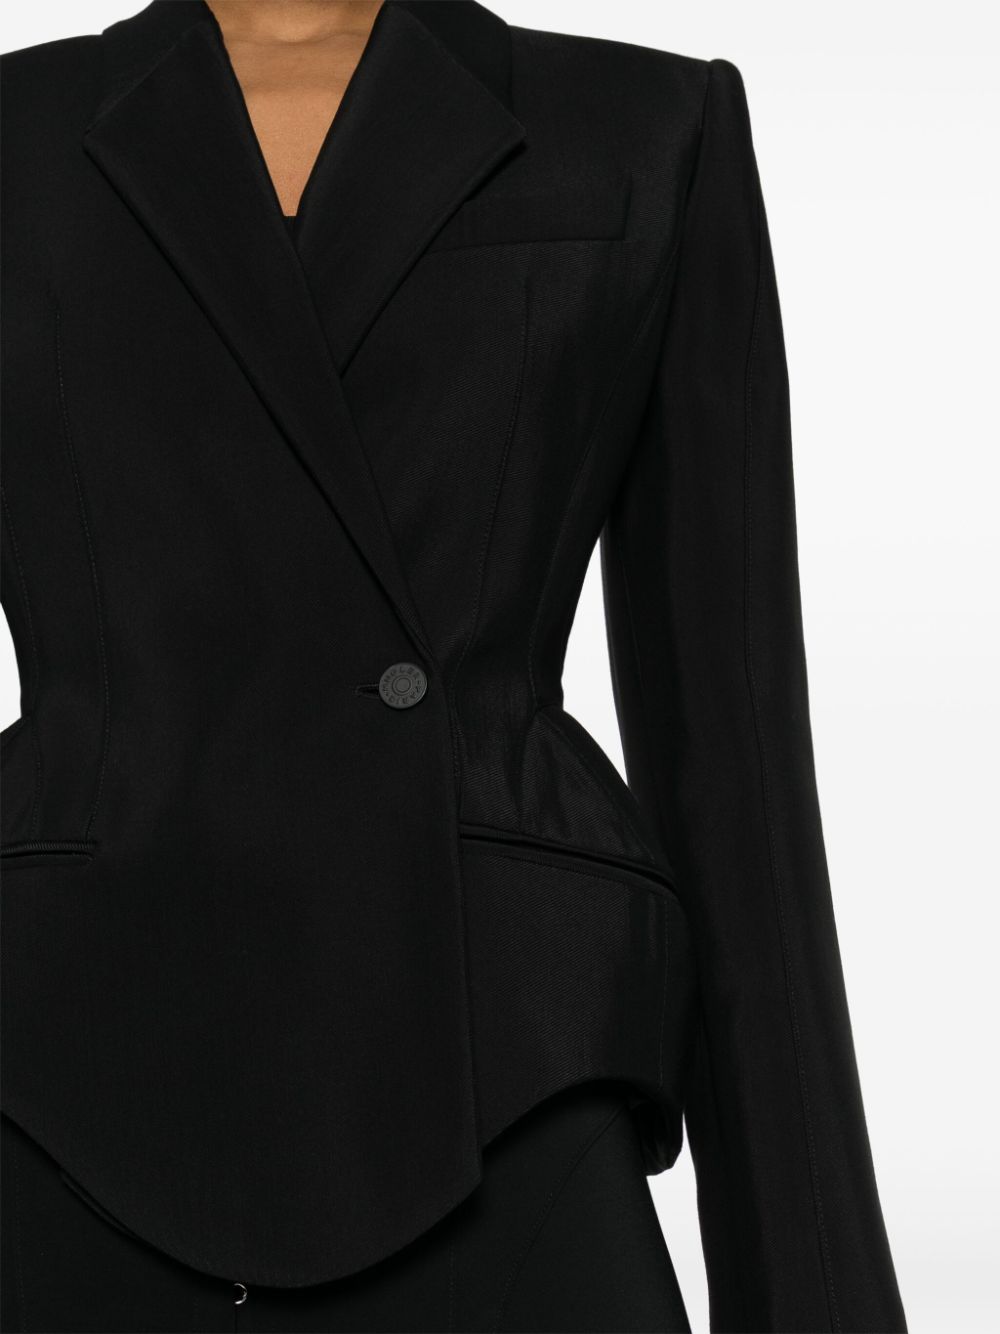 MUGLER Black Wool Blend Tailored Jacket for Women | SS24 Collection